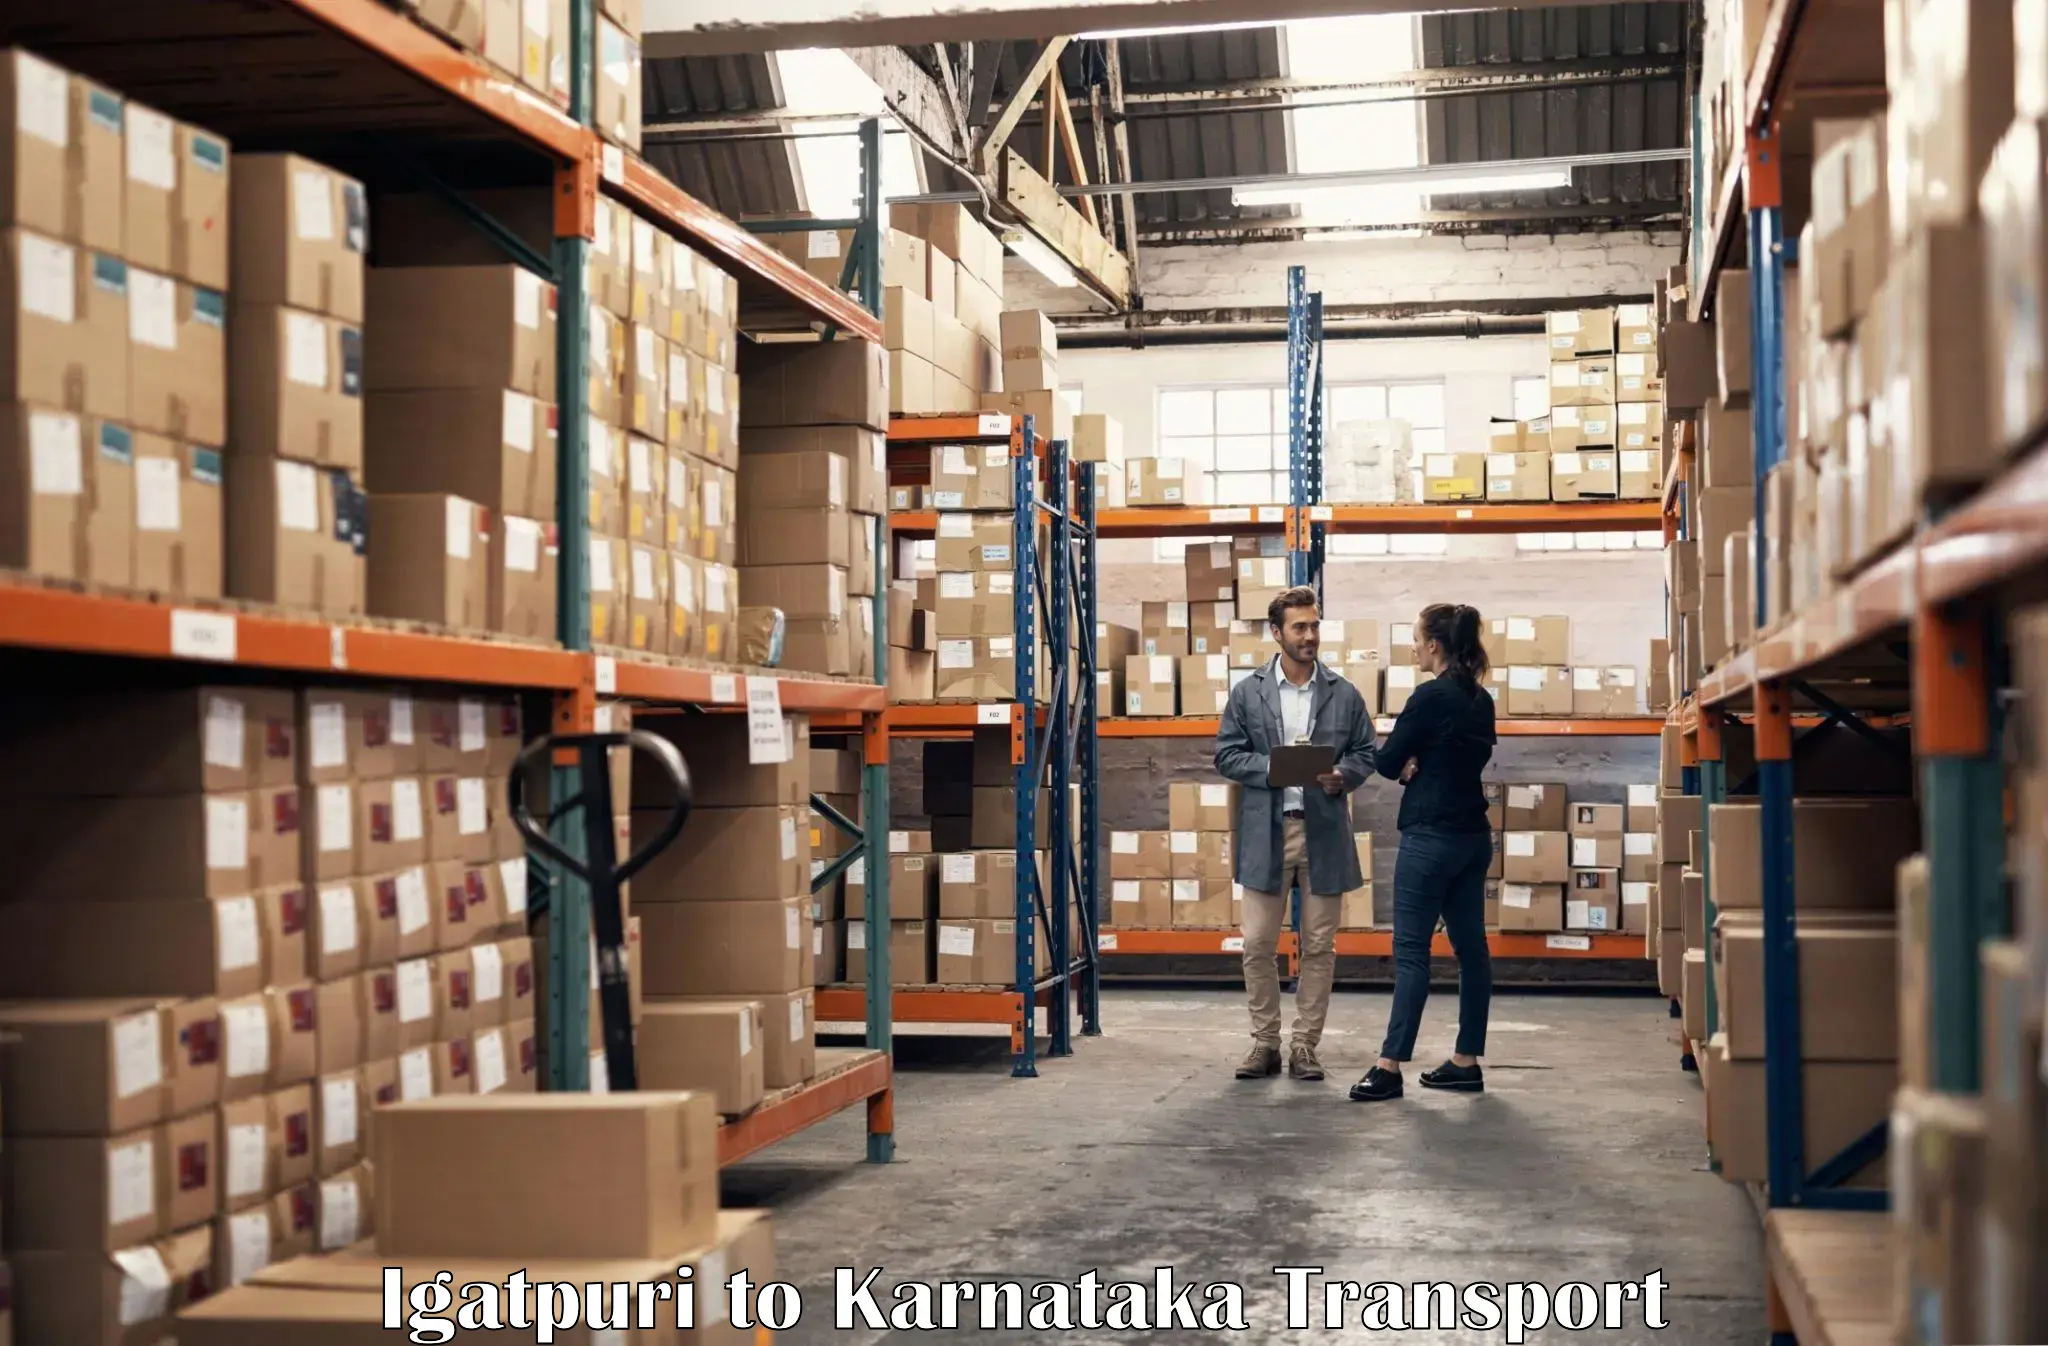 Shipping partner Igatpuri to Karnataka